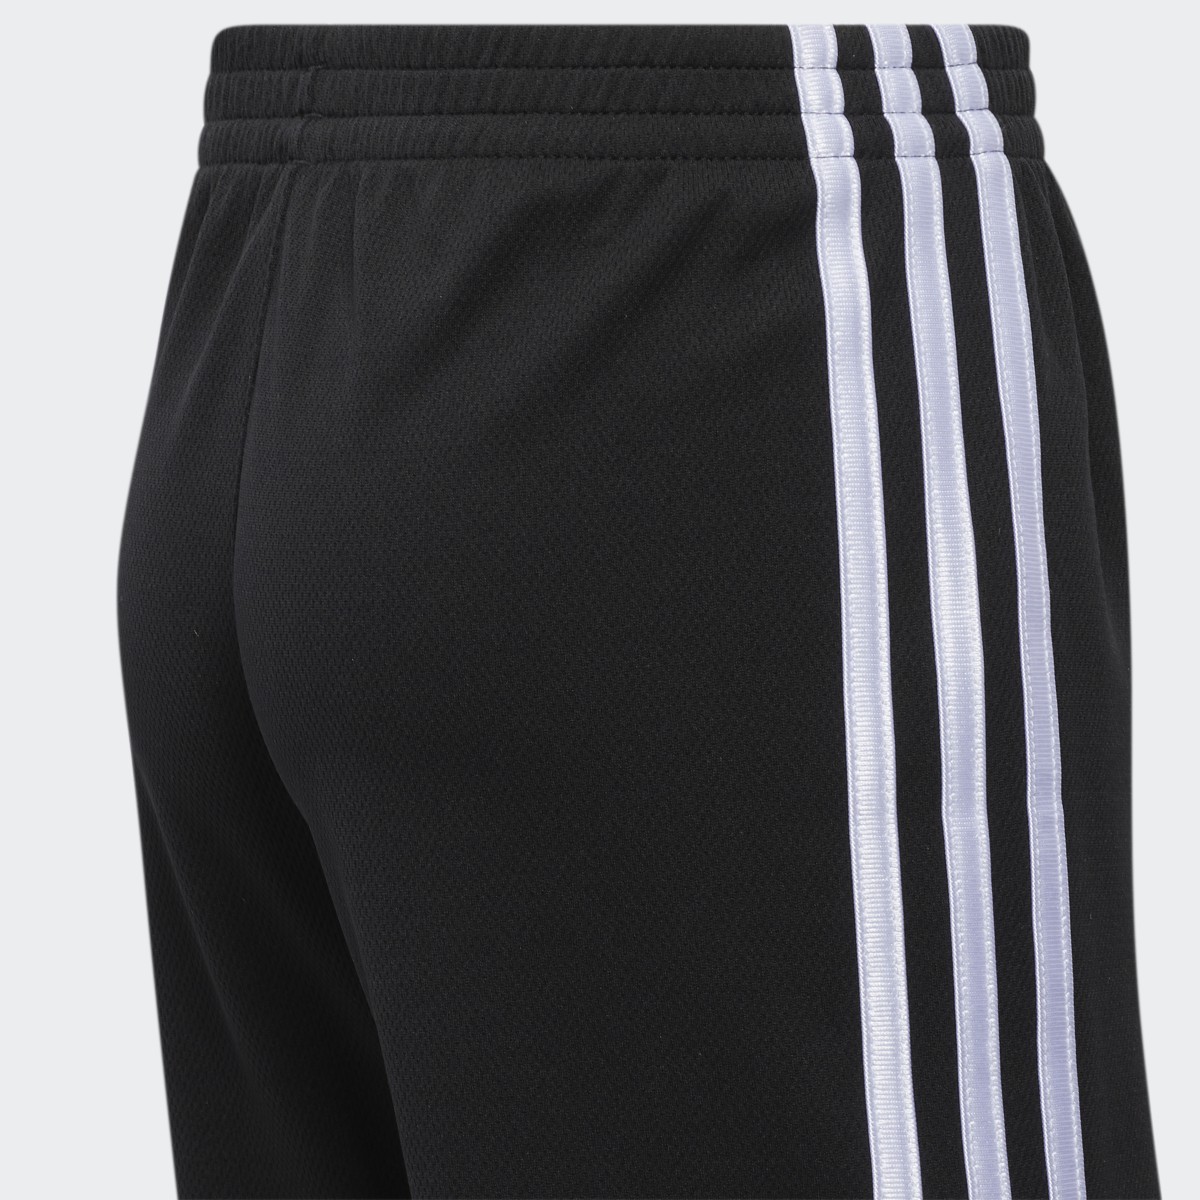 Adidas Classic 3-Stripes Shorts. 5